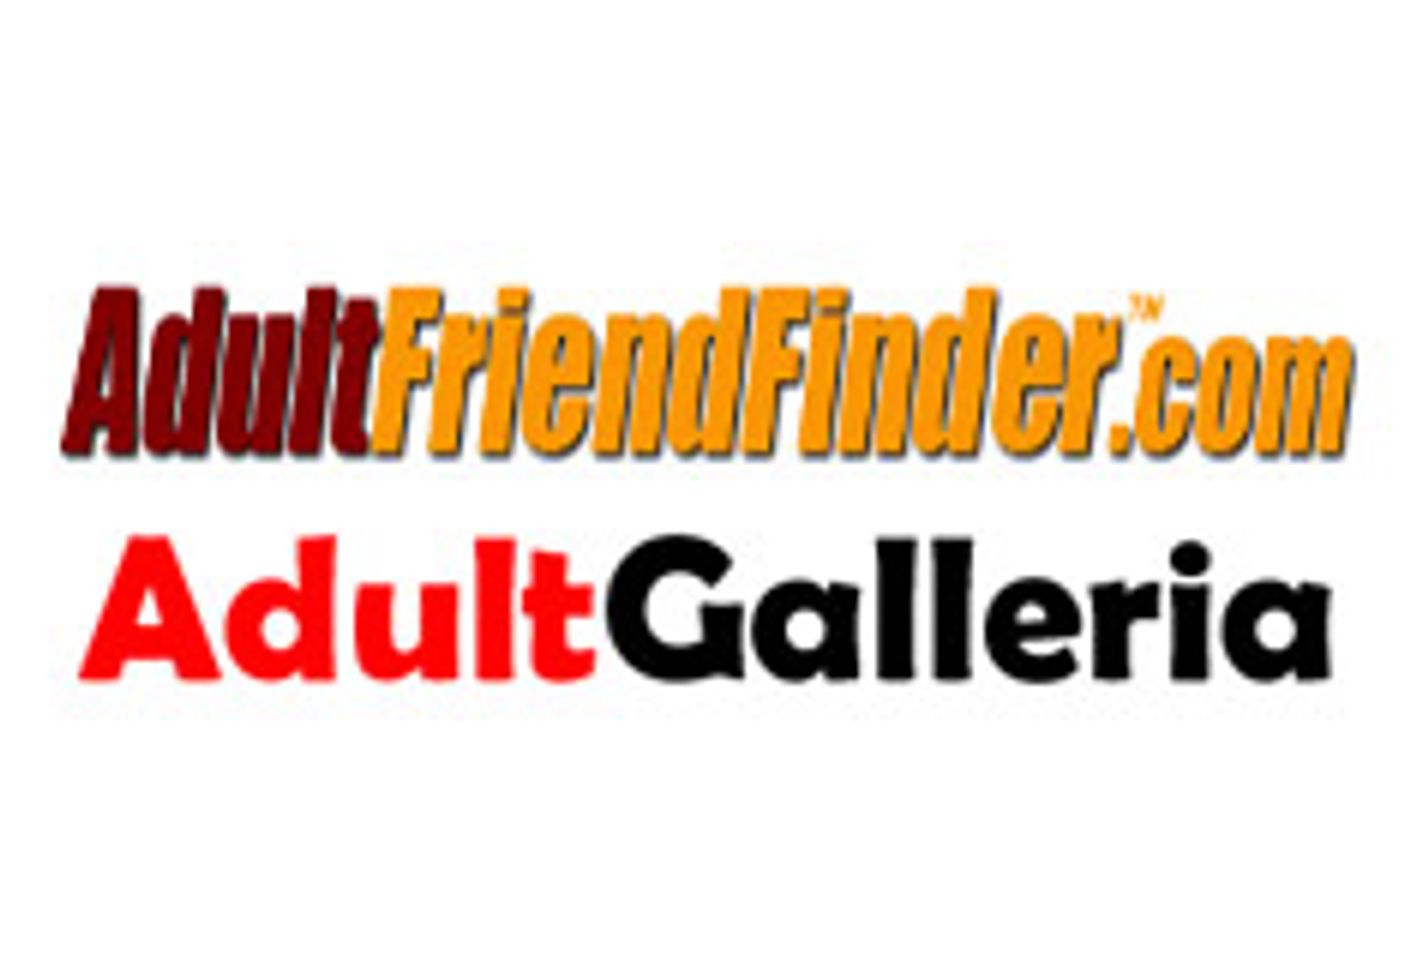 AdultFriendFinder Joins Adult Galleria